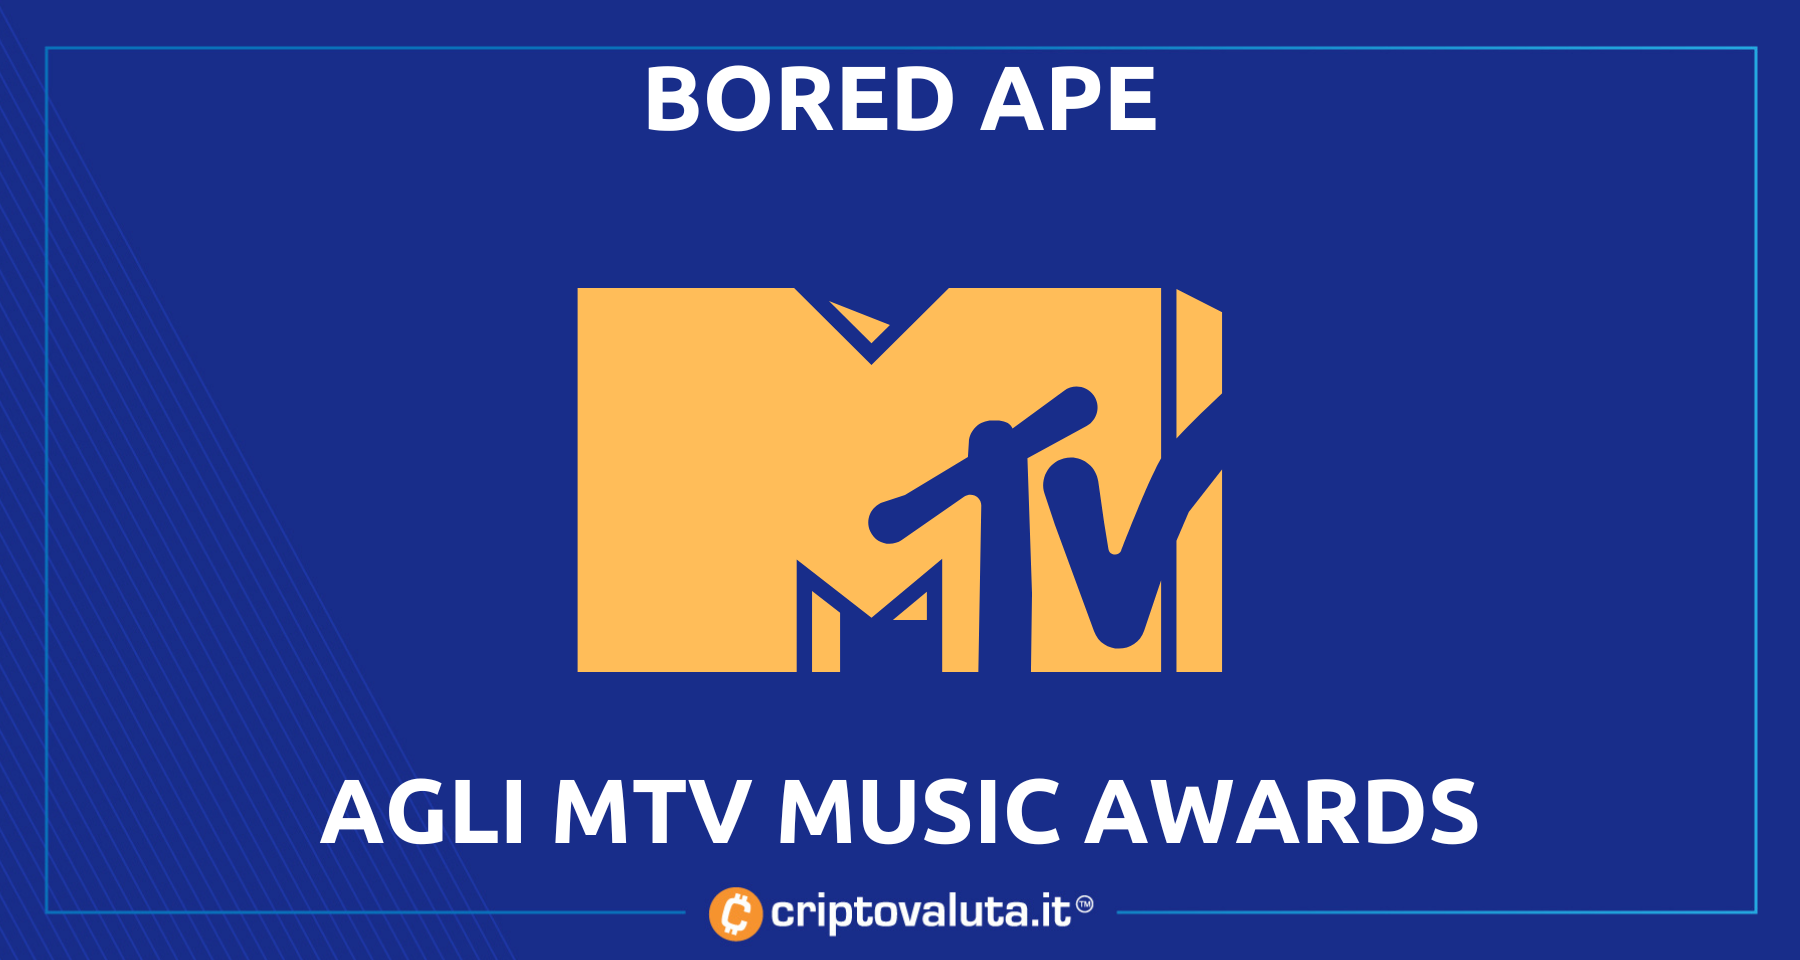 Bored Ape agli MTV Music Awards | Eminem e Snoop Dogg spingeranno $APE?